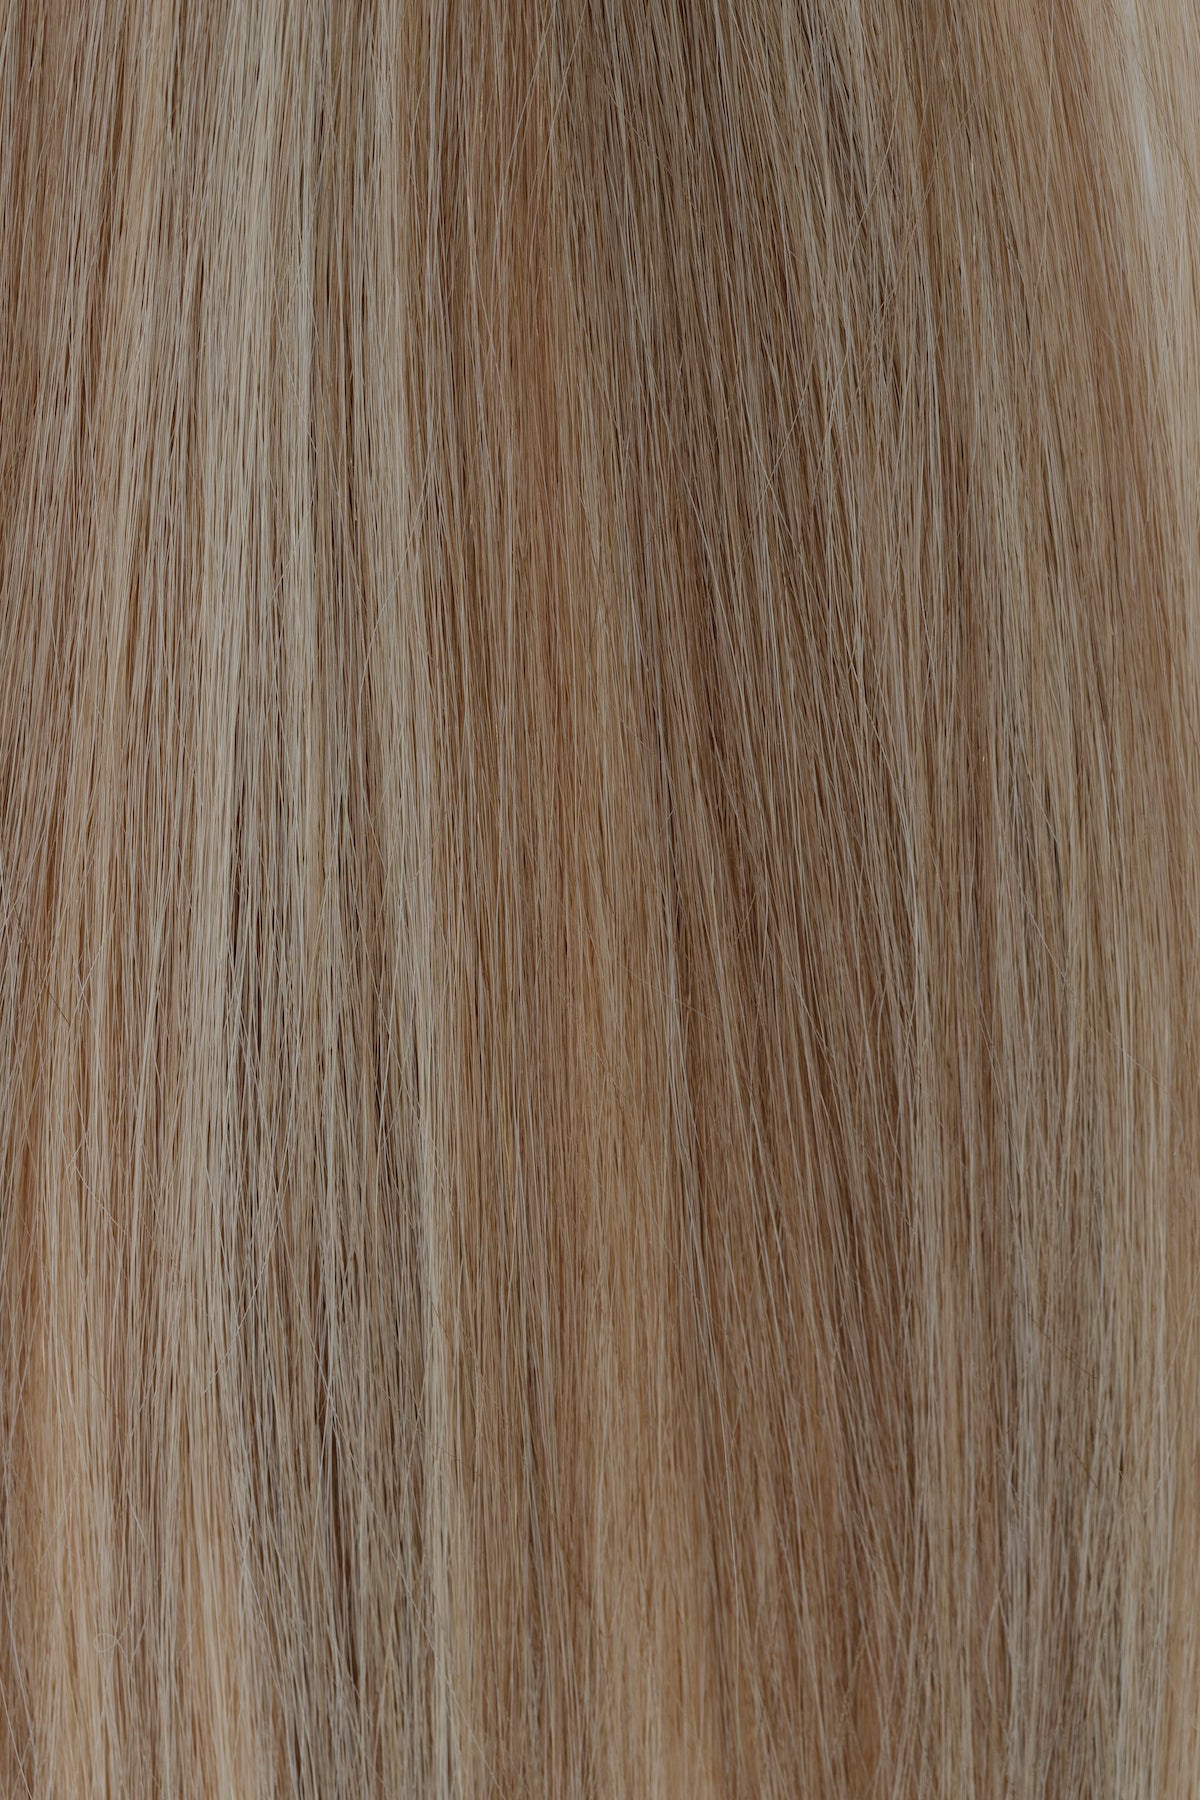 Tape-In Hair Extensions | Belgravia - Scandi Blonde